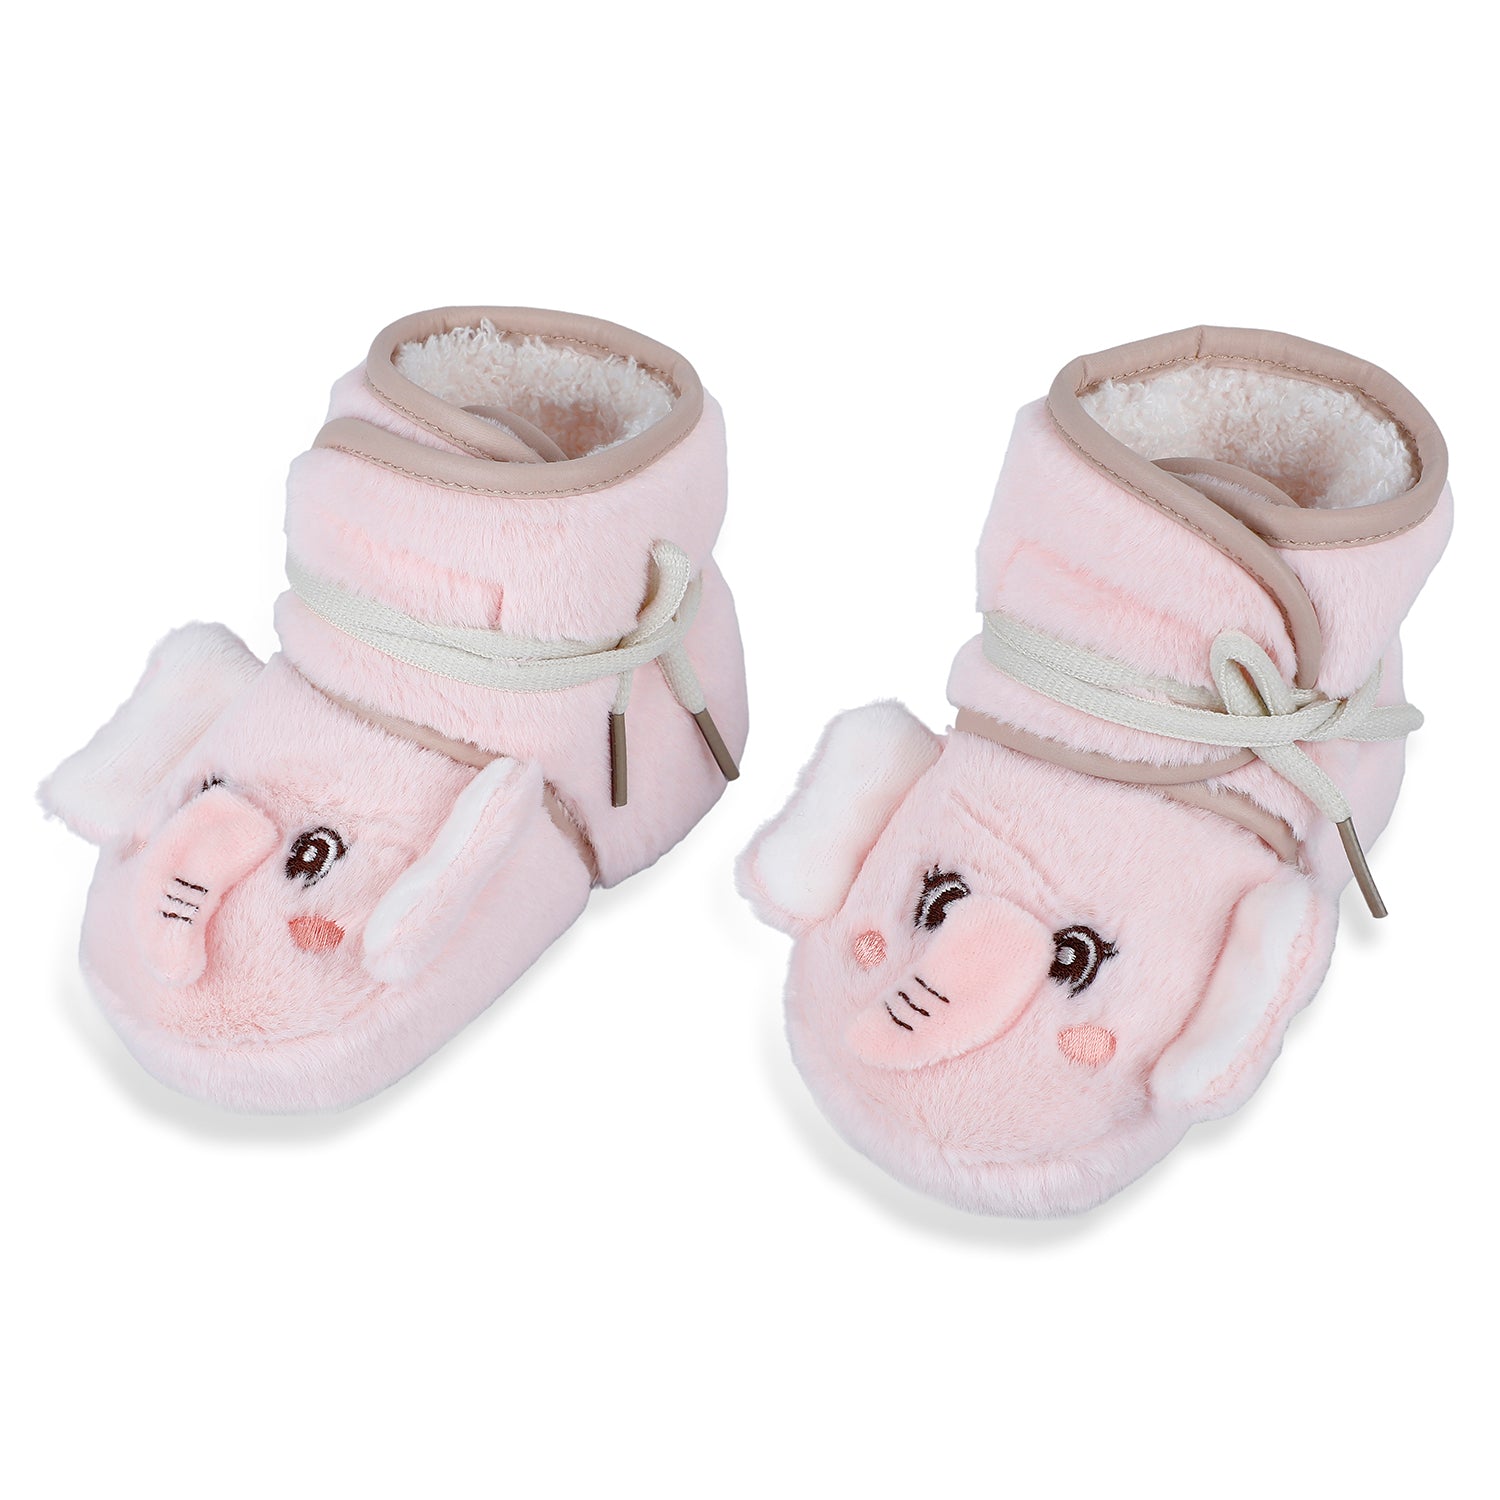 Baby Moo 3D Elephant Cozy Soft Velcro Furry Booties - Pink - Baby Moo